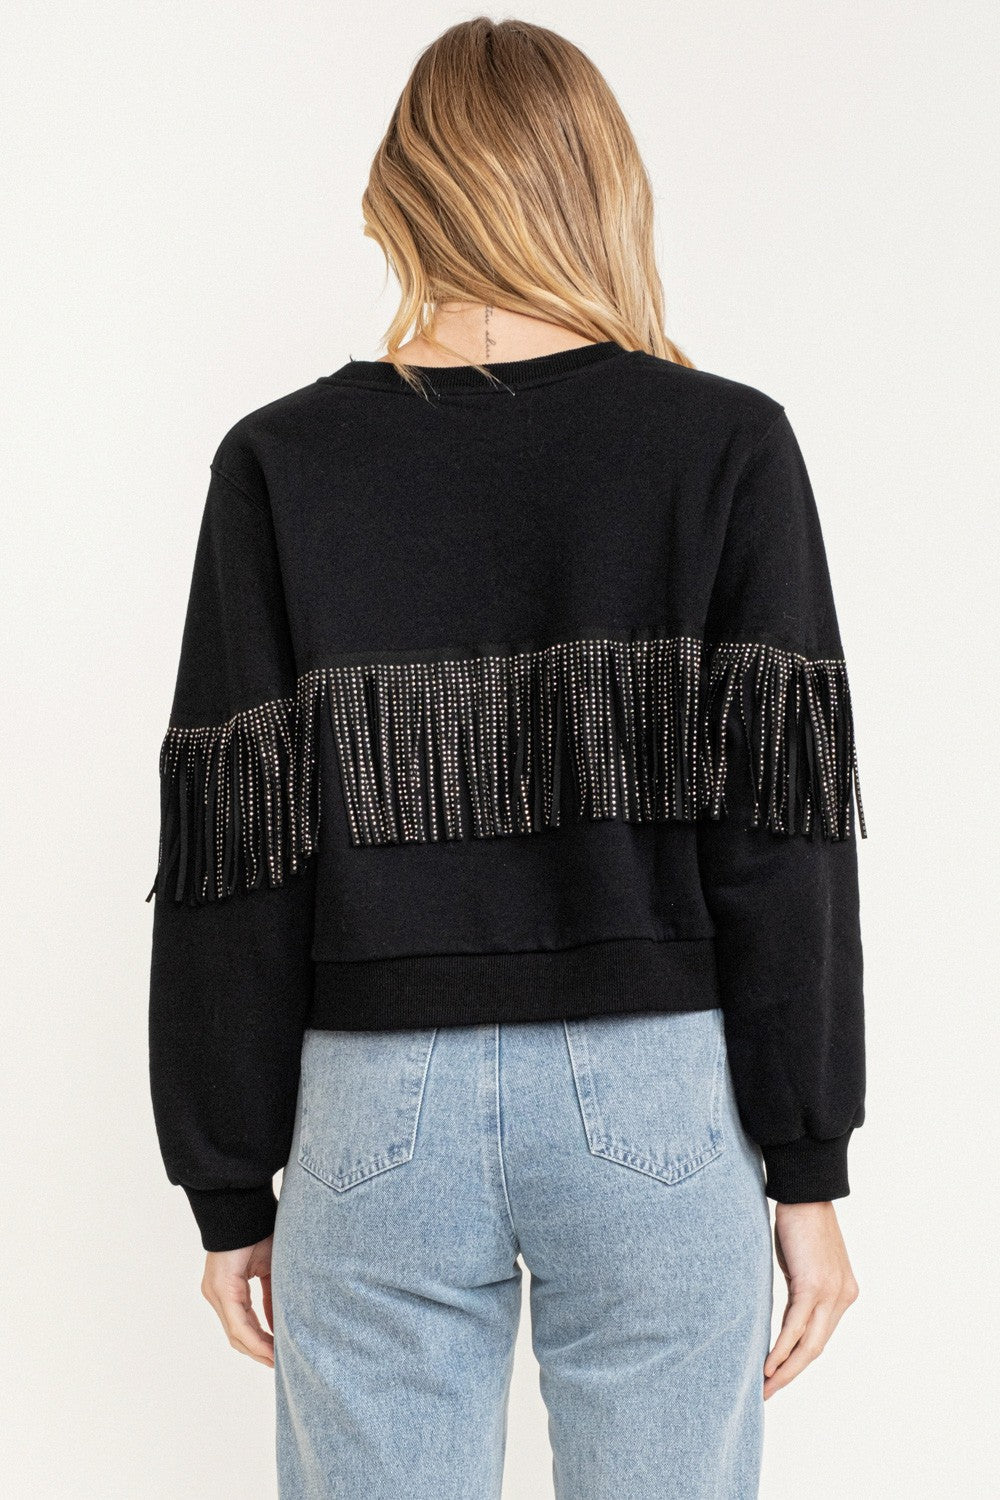 Embellished Fringe Long Sleeve Sweater Black.  Back view.